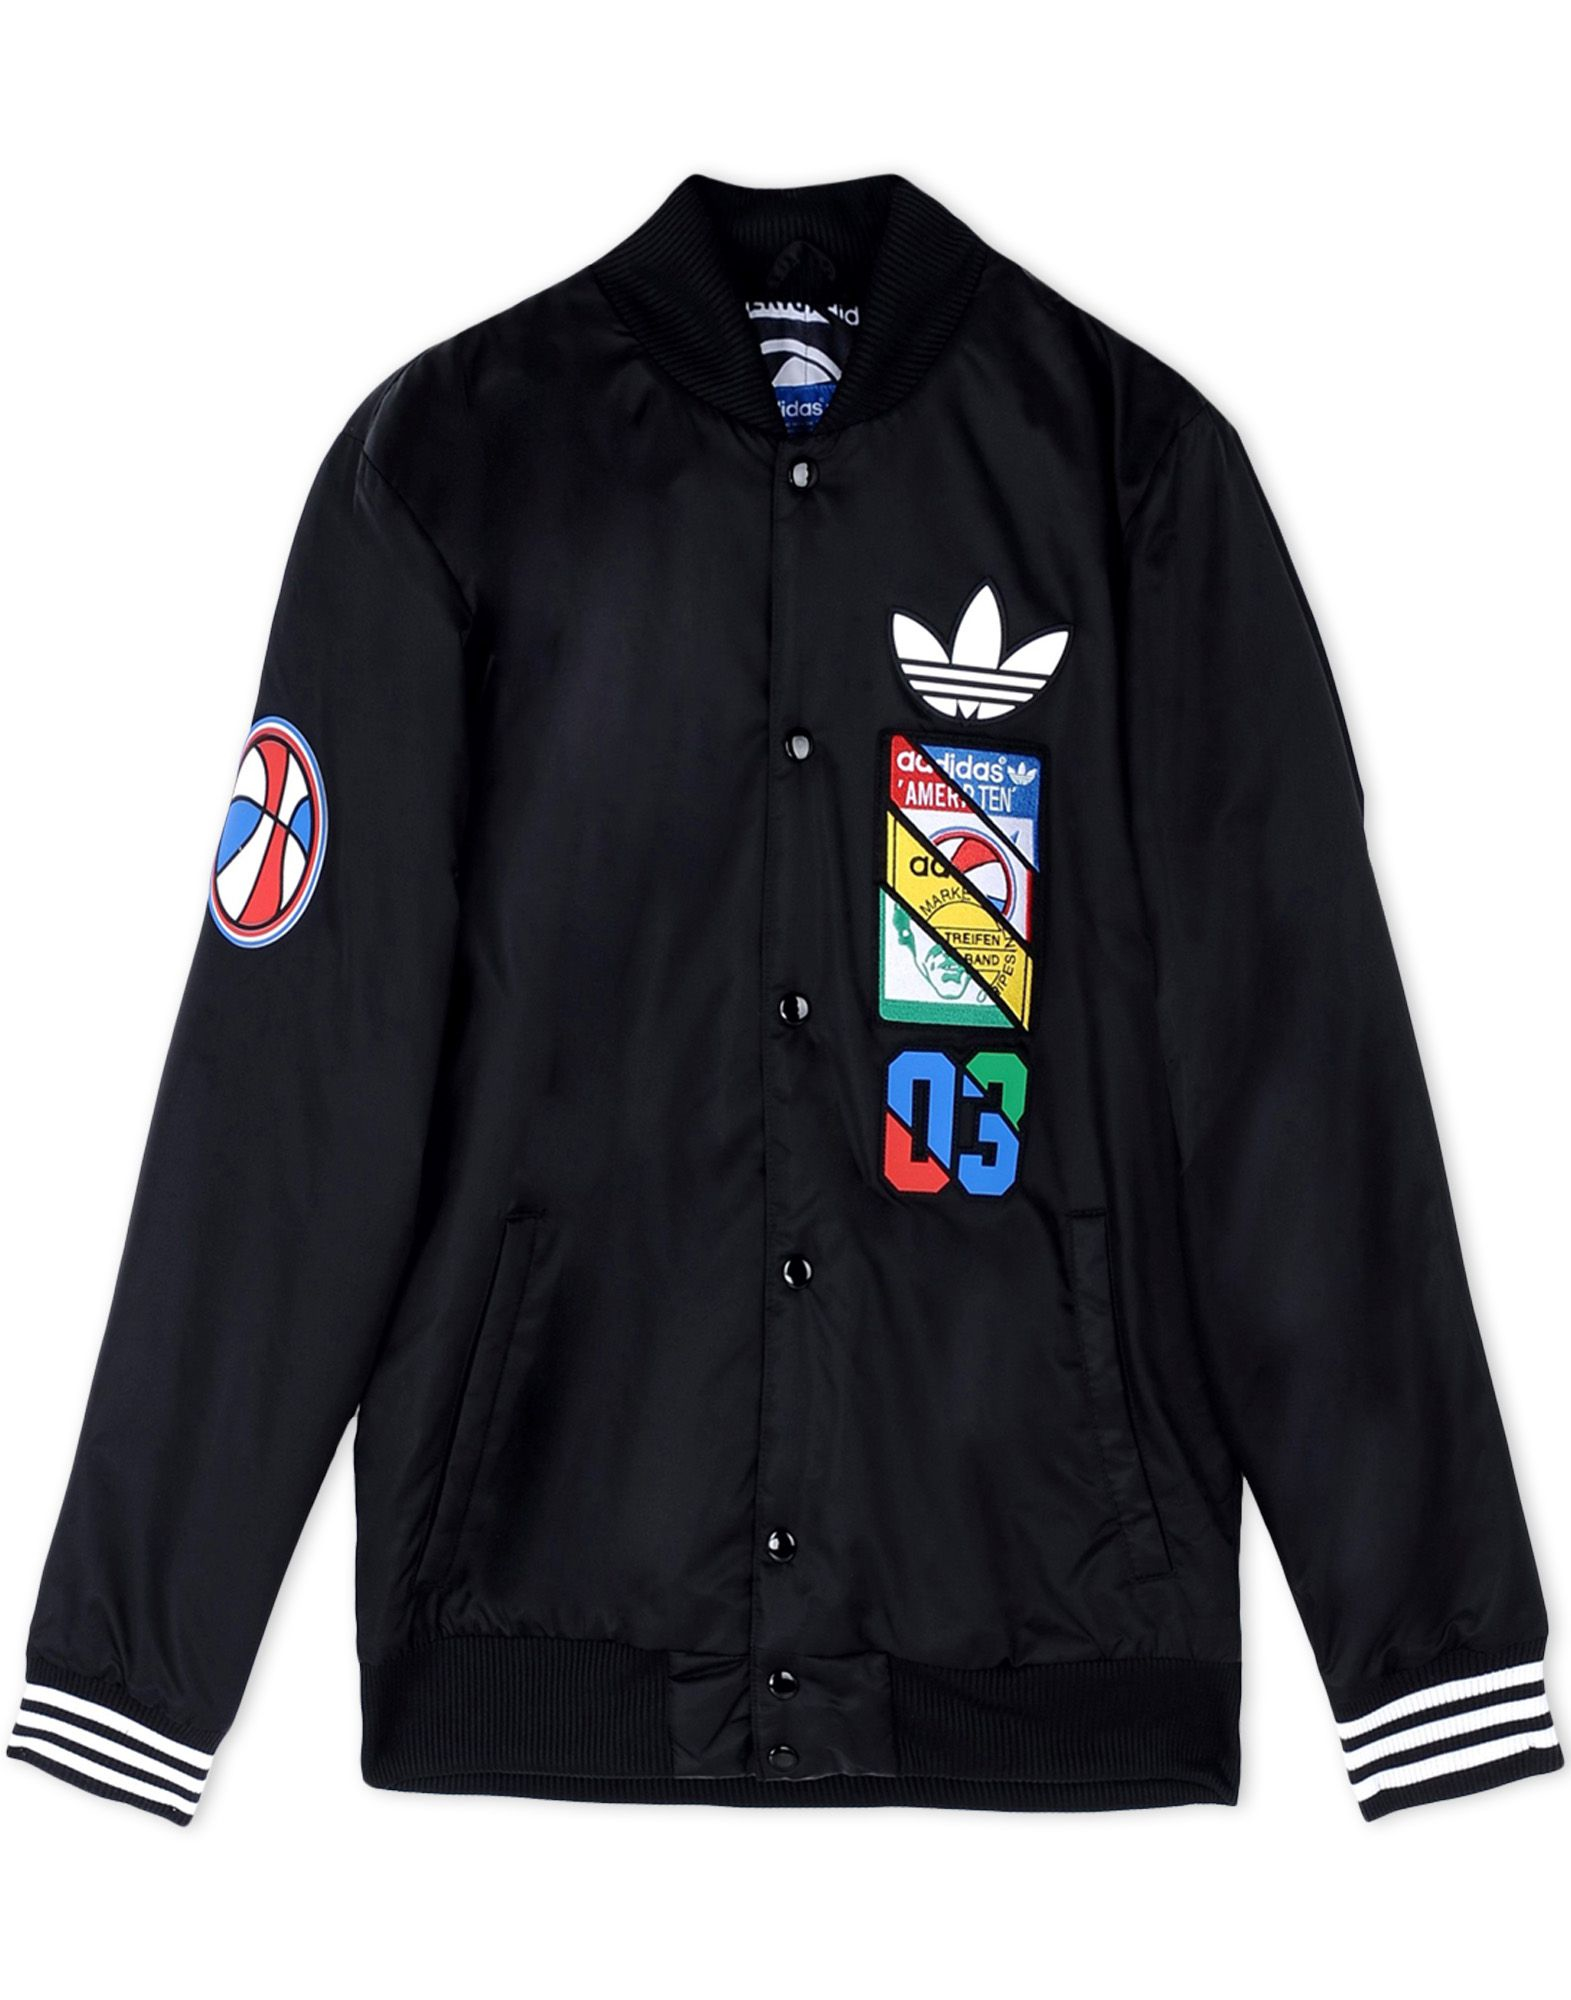 Adidas originals Jacket in Black for Men | Lyst